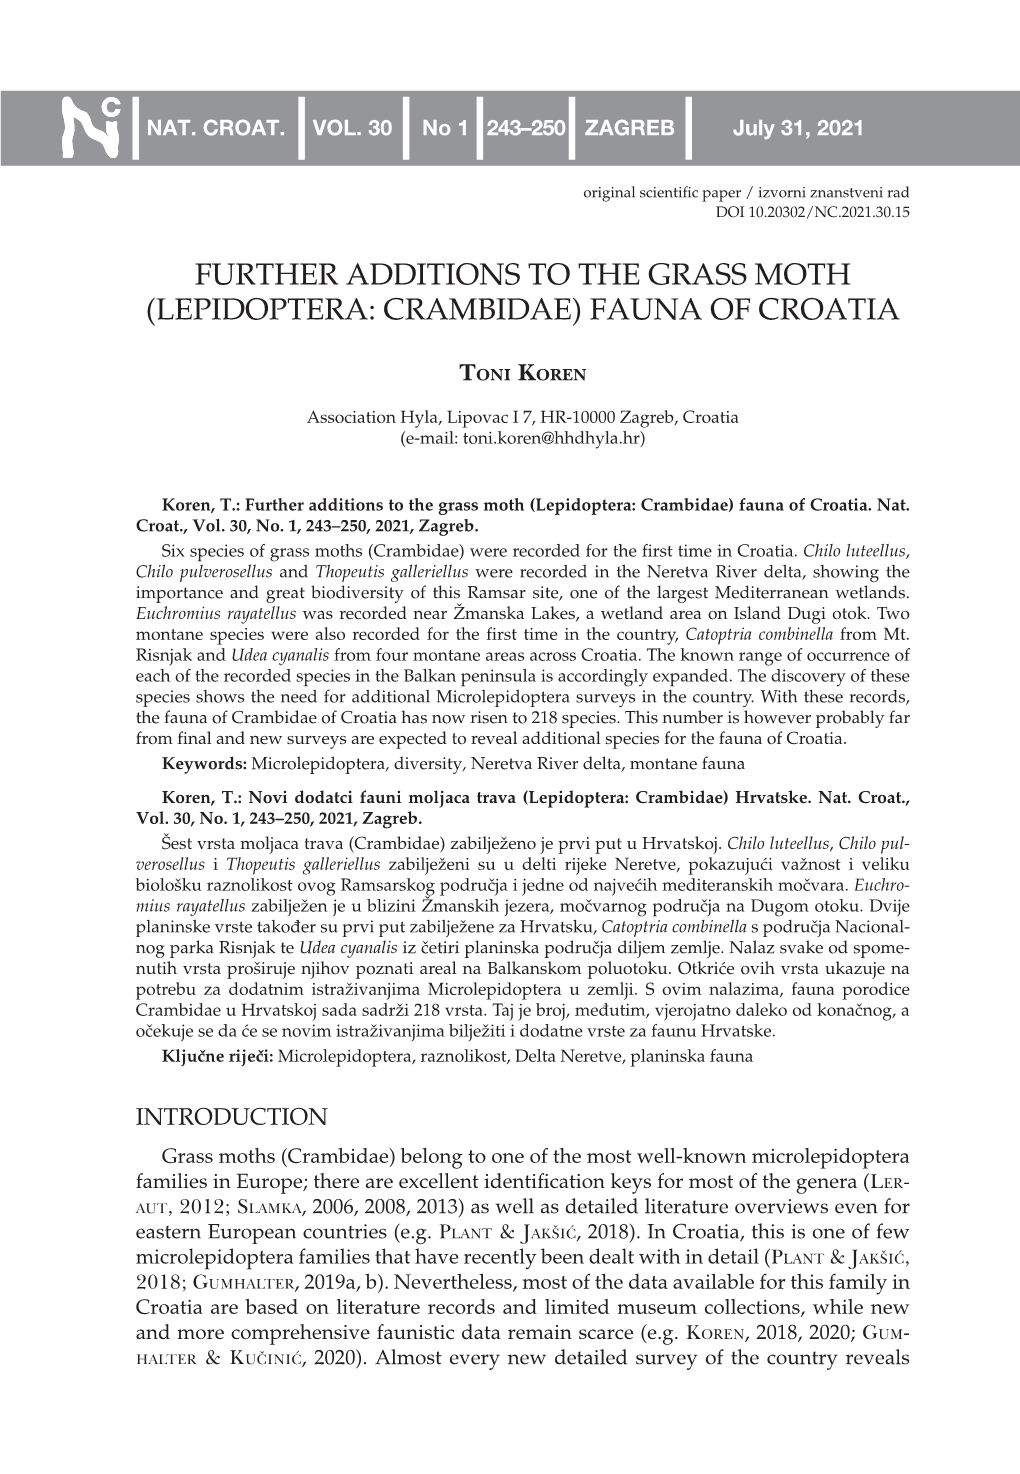 Further Additions to the Grass Moth (Lepidoptera: Crambidae) Fauna of Croatia